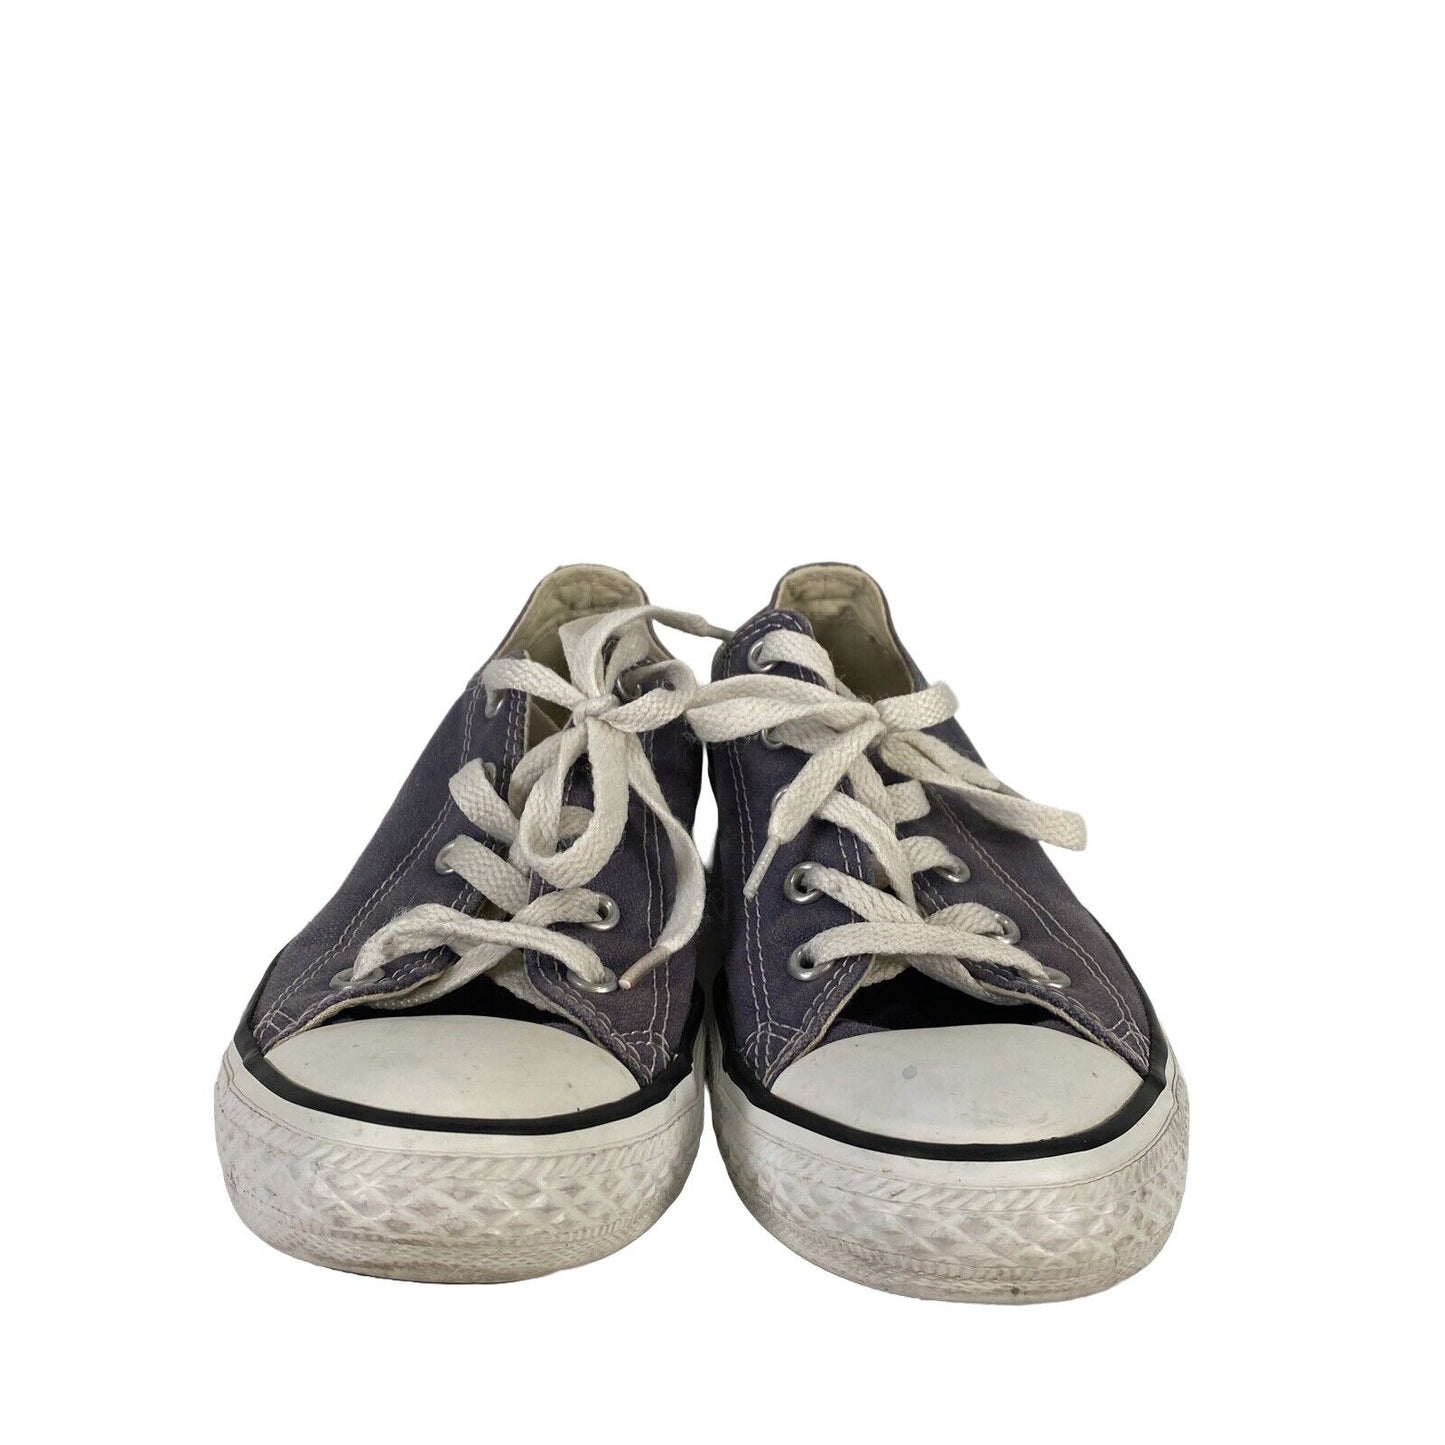 Converse Big Kids Unisex Blue Lace Up Low Top Sneakers Shoes - 3